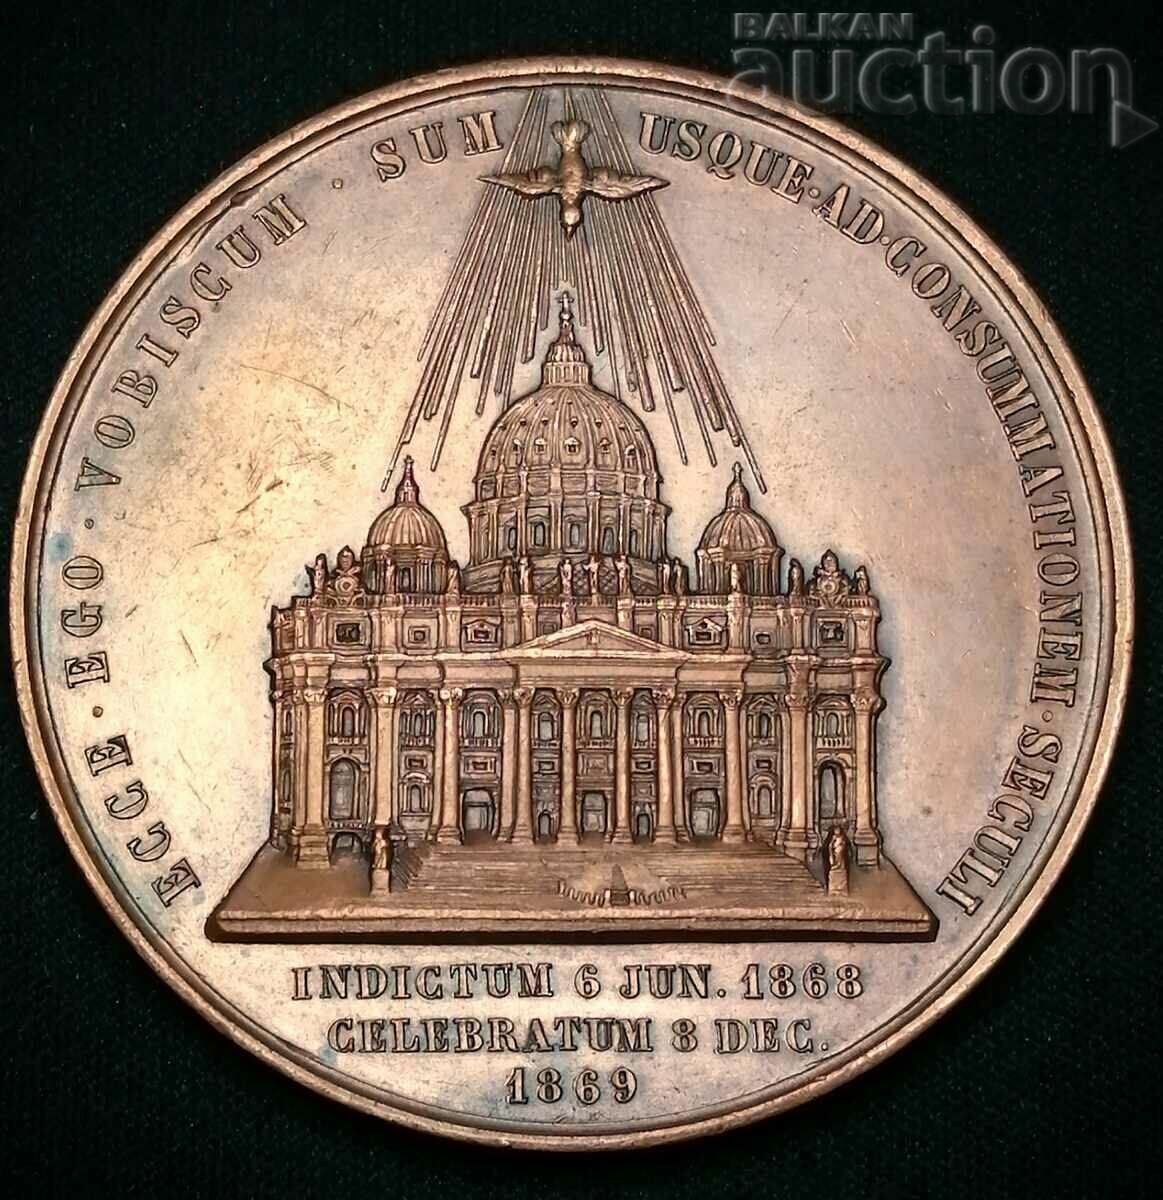 Vatican, Pius IX 1869 Prima medalie a Conciliului Vatican.